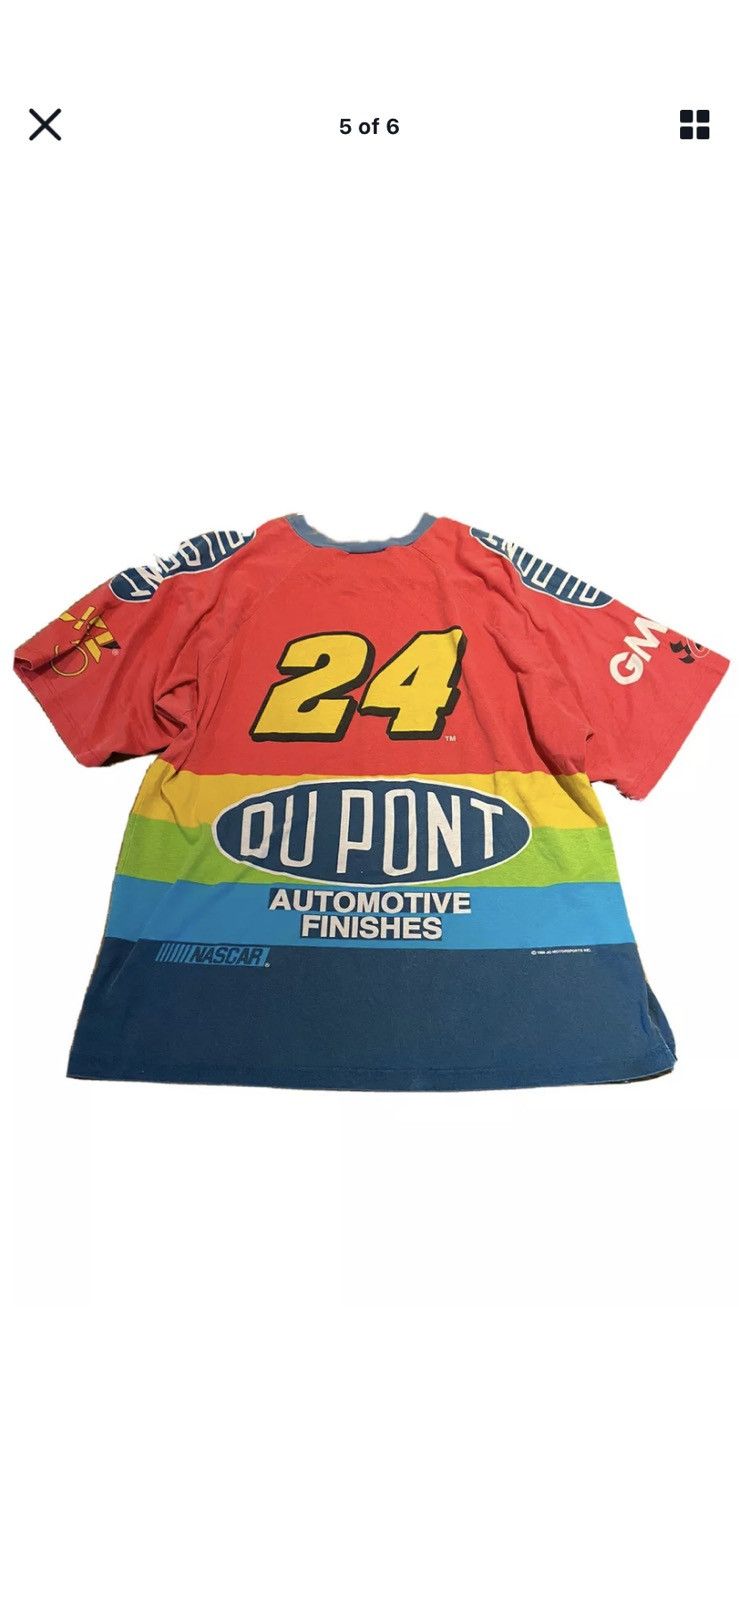 Chase Authentics Vintage 1998 Jeff Gordon 24 Dupont NASCAR Pit Crew Tshirt XL Size US XL / EU 56 / 4 - 2 Preview